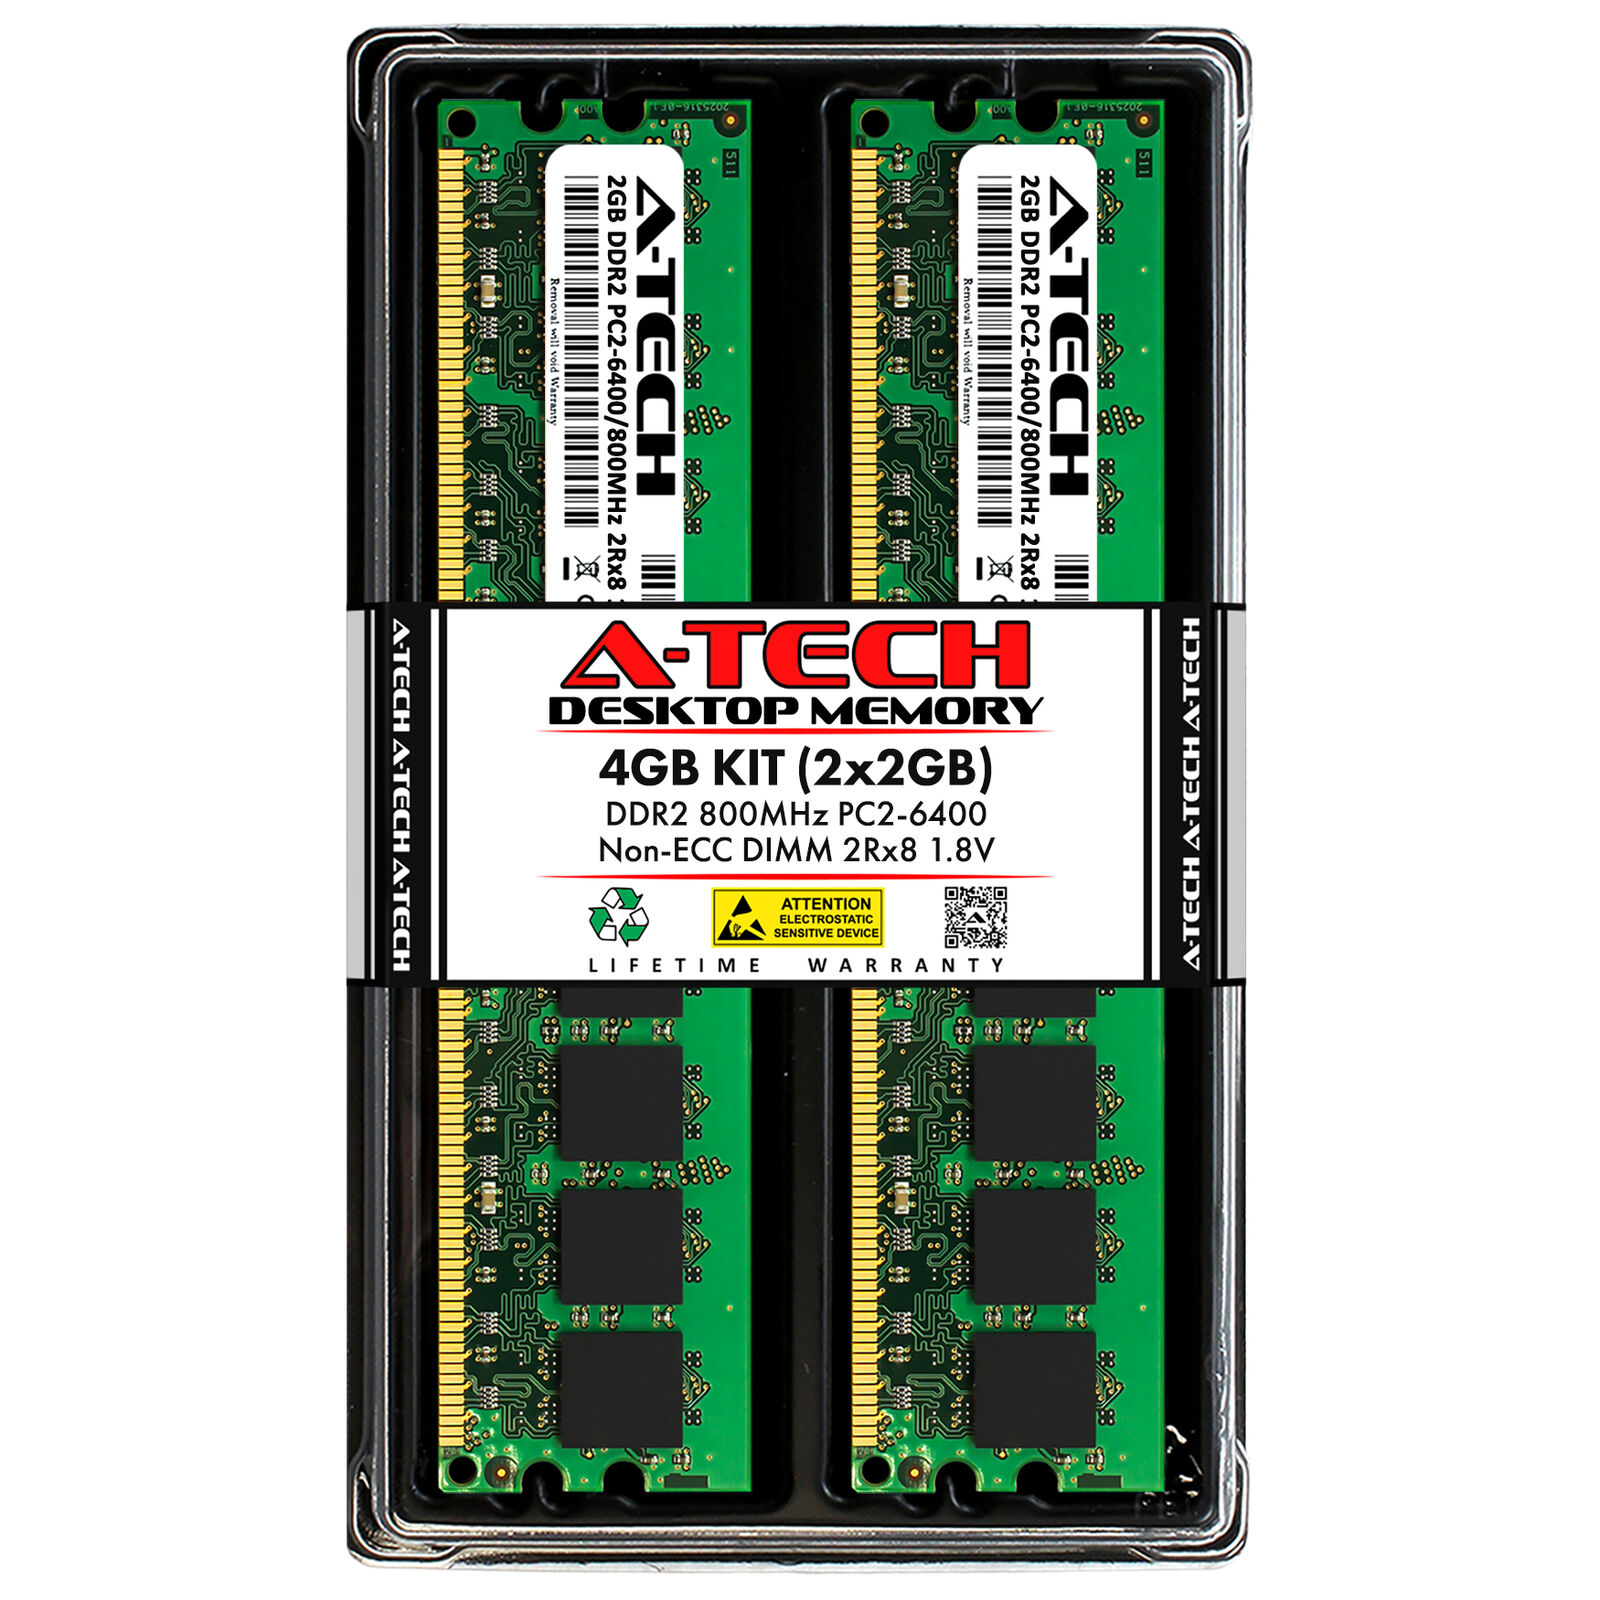 4GB 2x 2GB DDR2-800 DIMM Kingston HyperX KHX6400D2K2/4G Equivalent Memory RAM